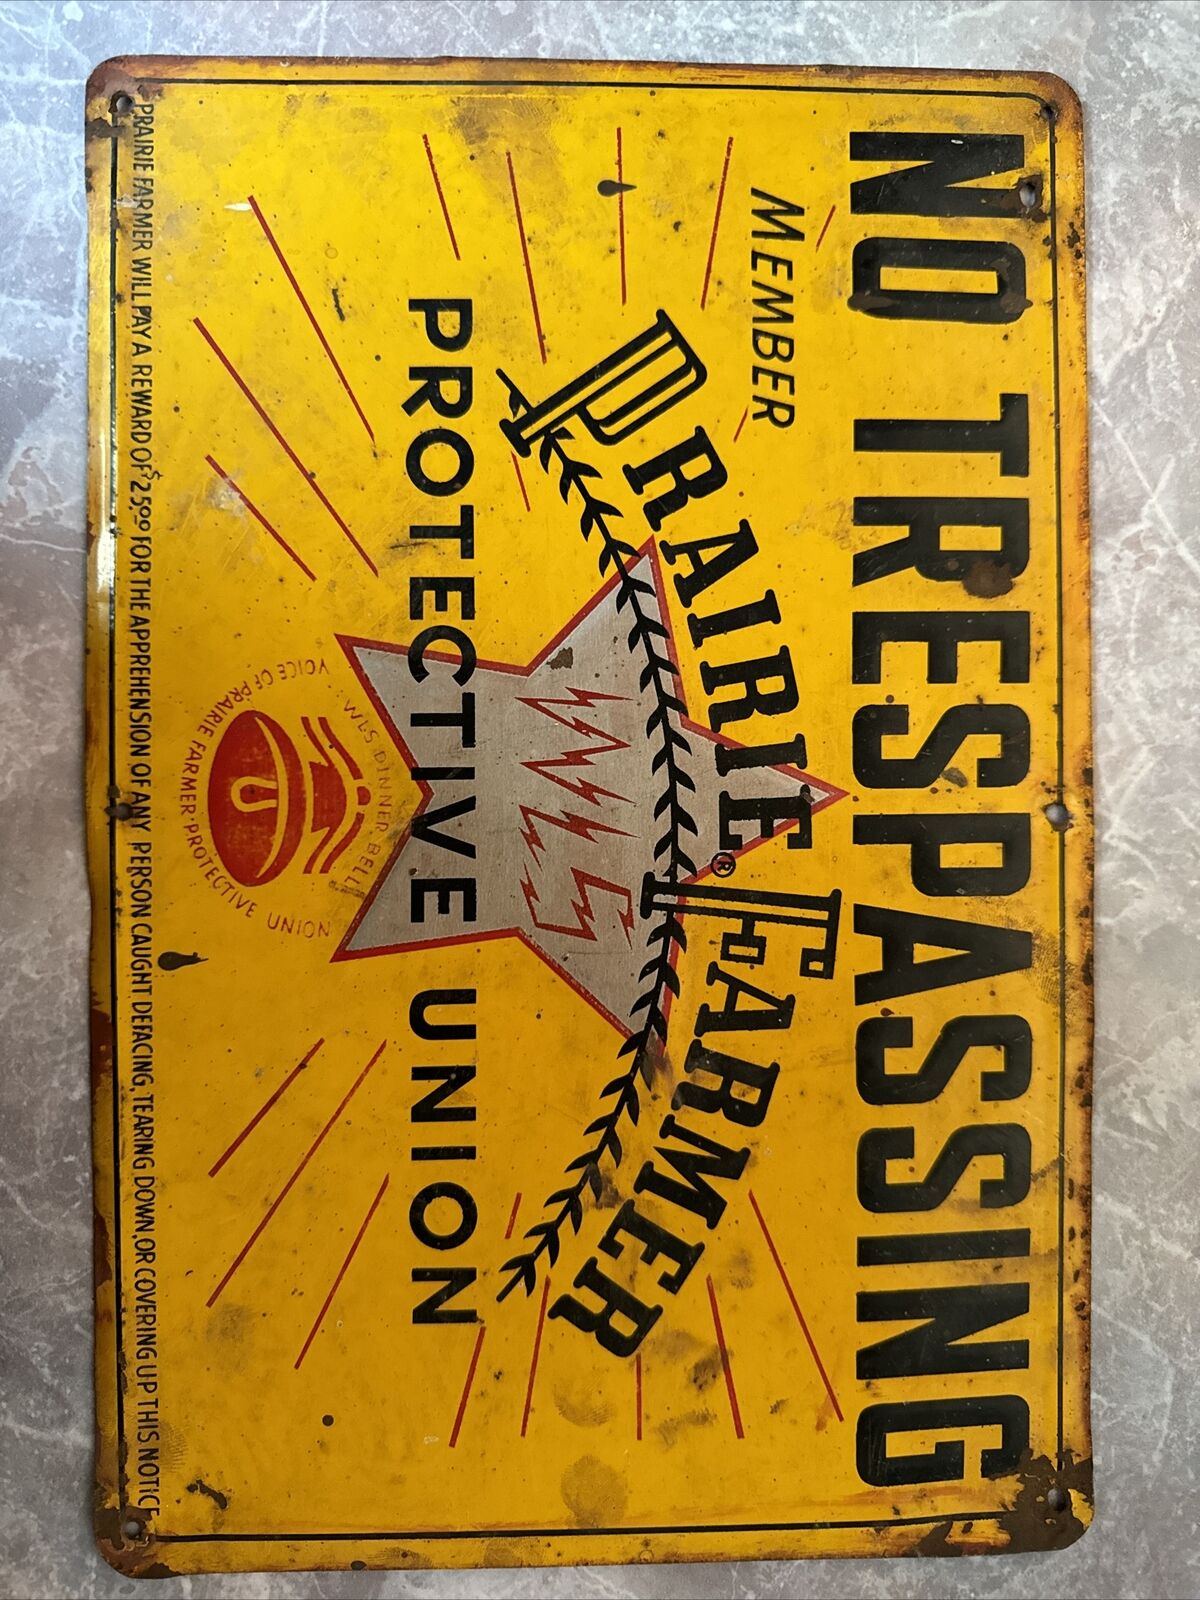 Vintage PRAIRIE FARMER PROTECTIVE UNION No Trespassing Metal Farm Barn Sign